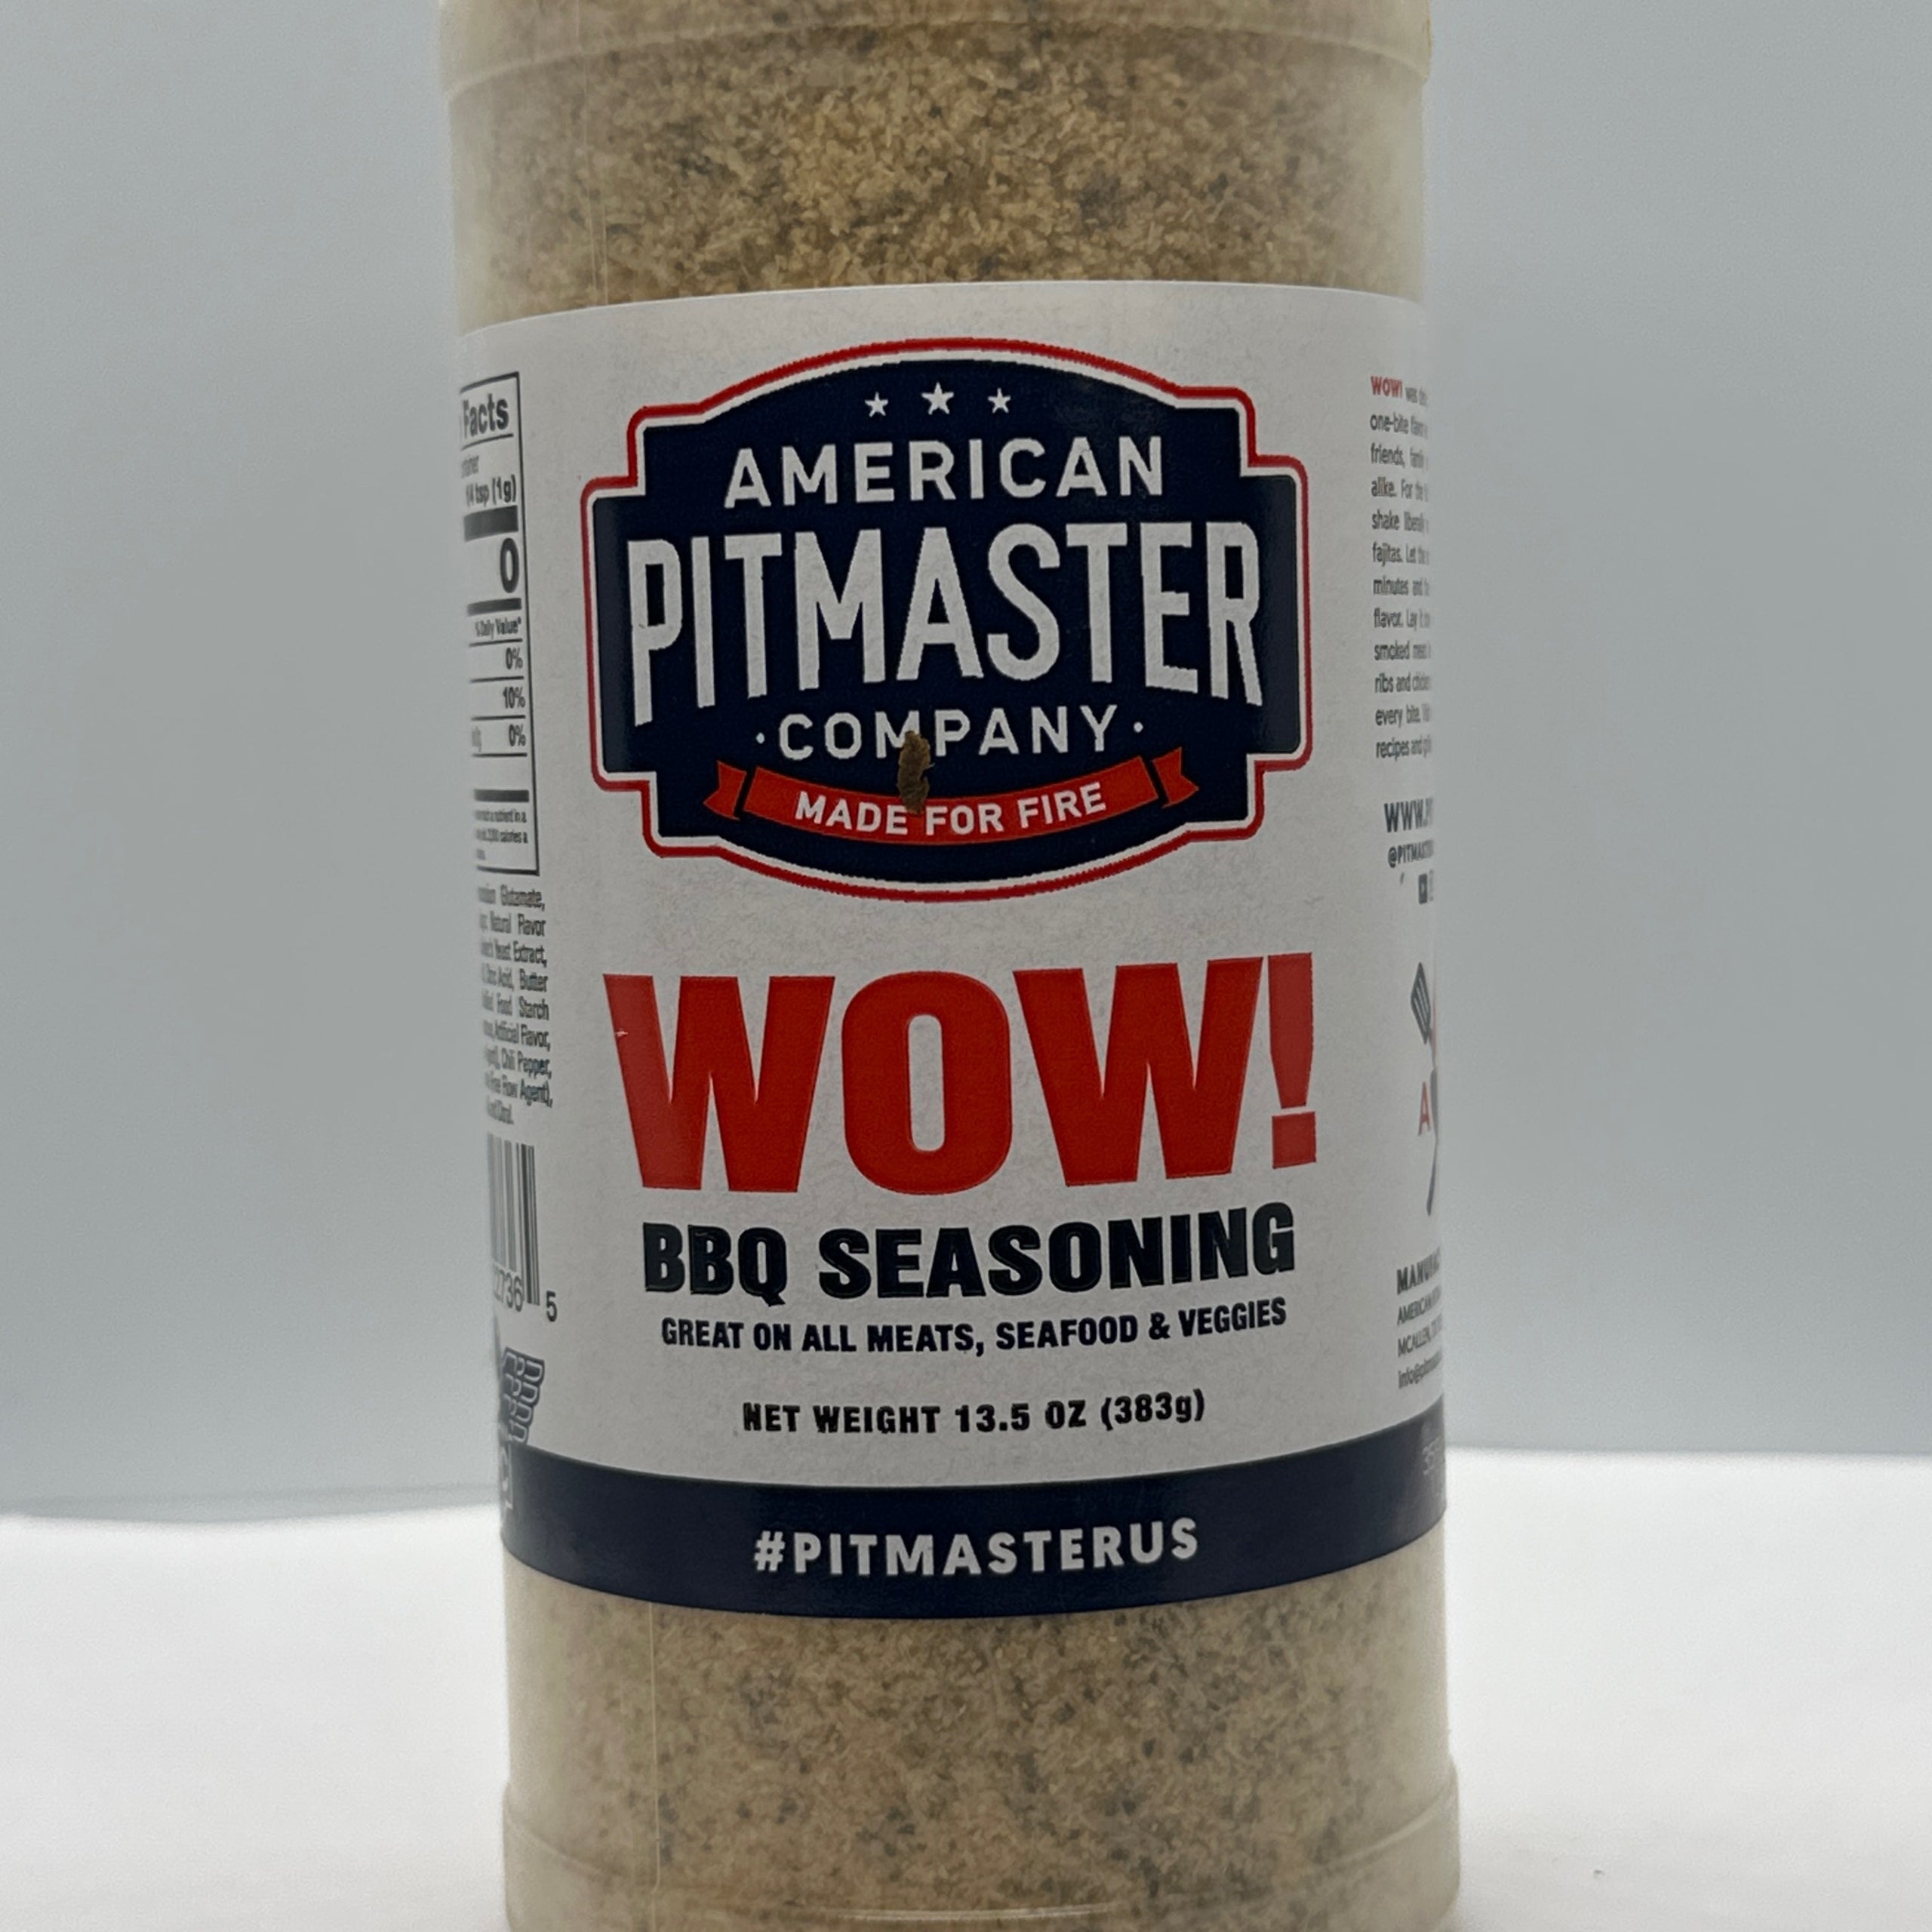 American Pitmaster Company Wow! BBQ Seasoning